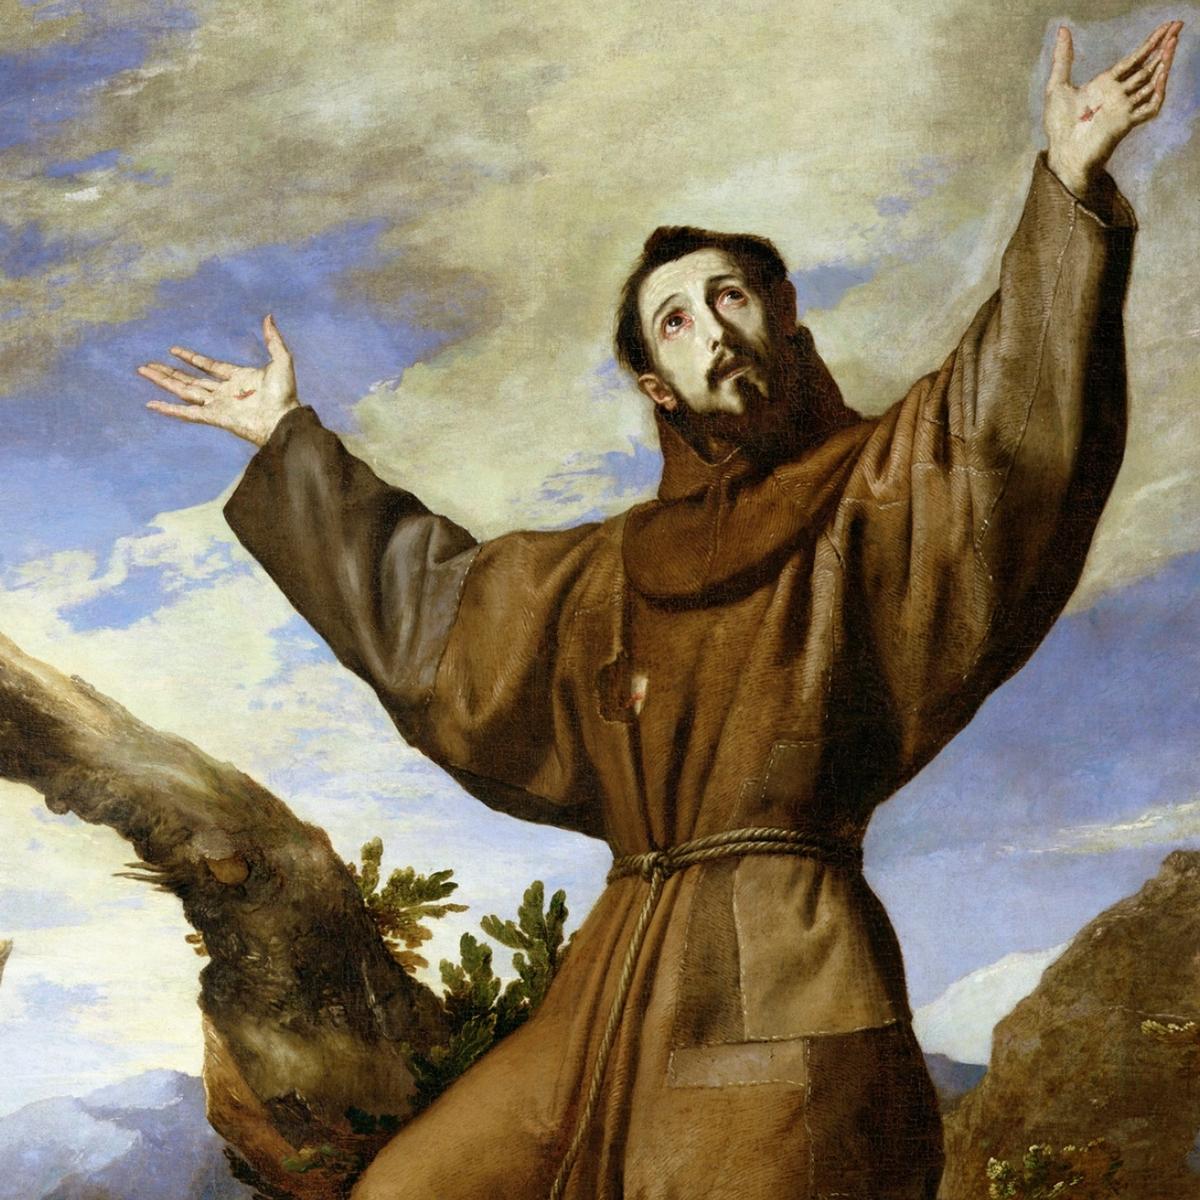 St Francis of Assisi by Jusepe de Ribera